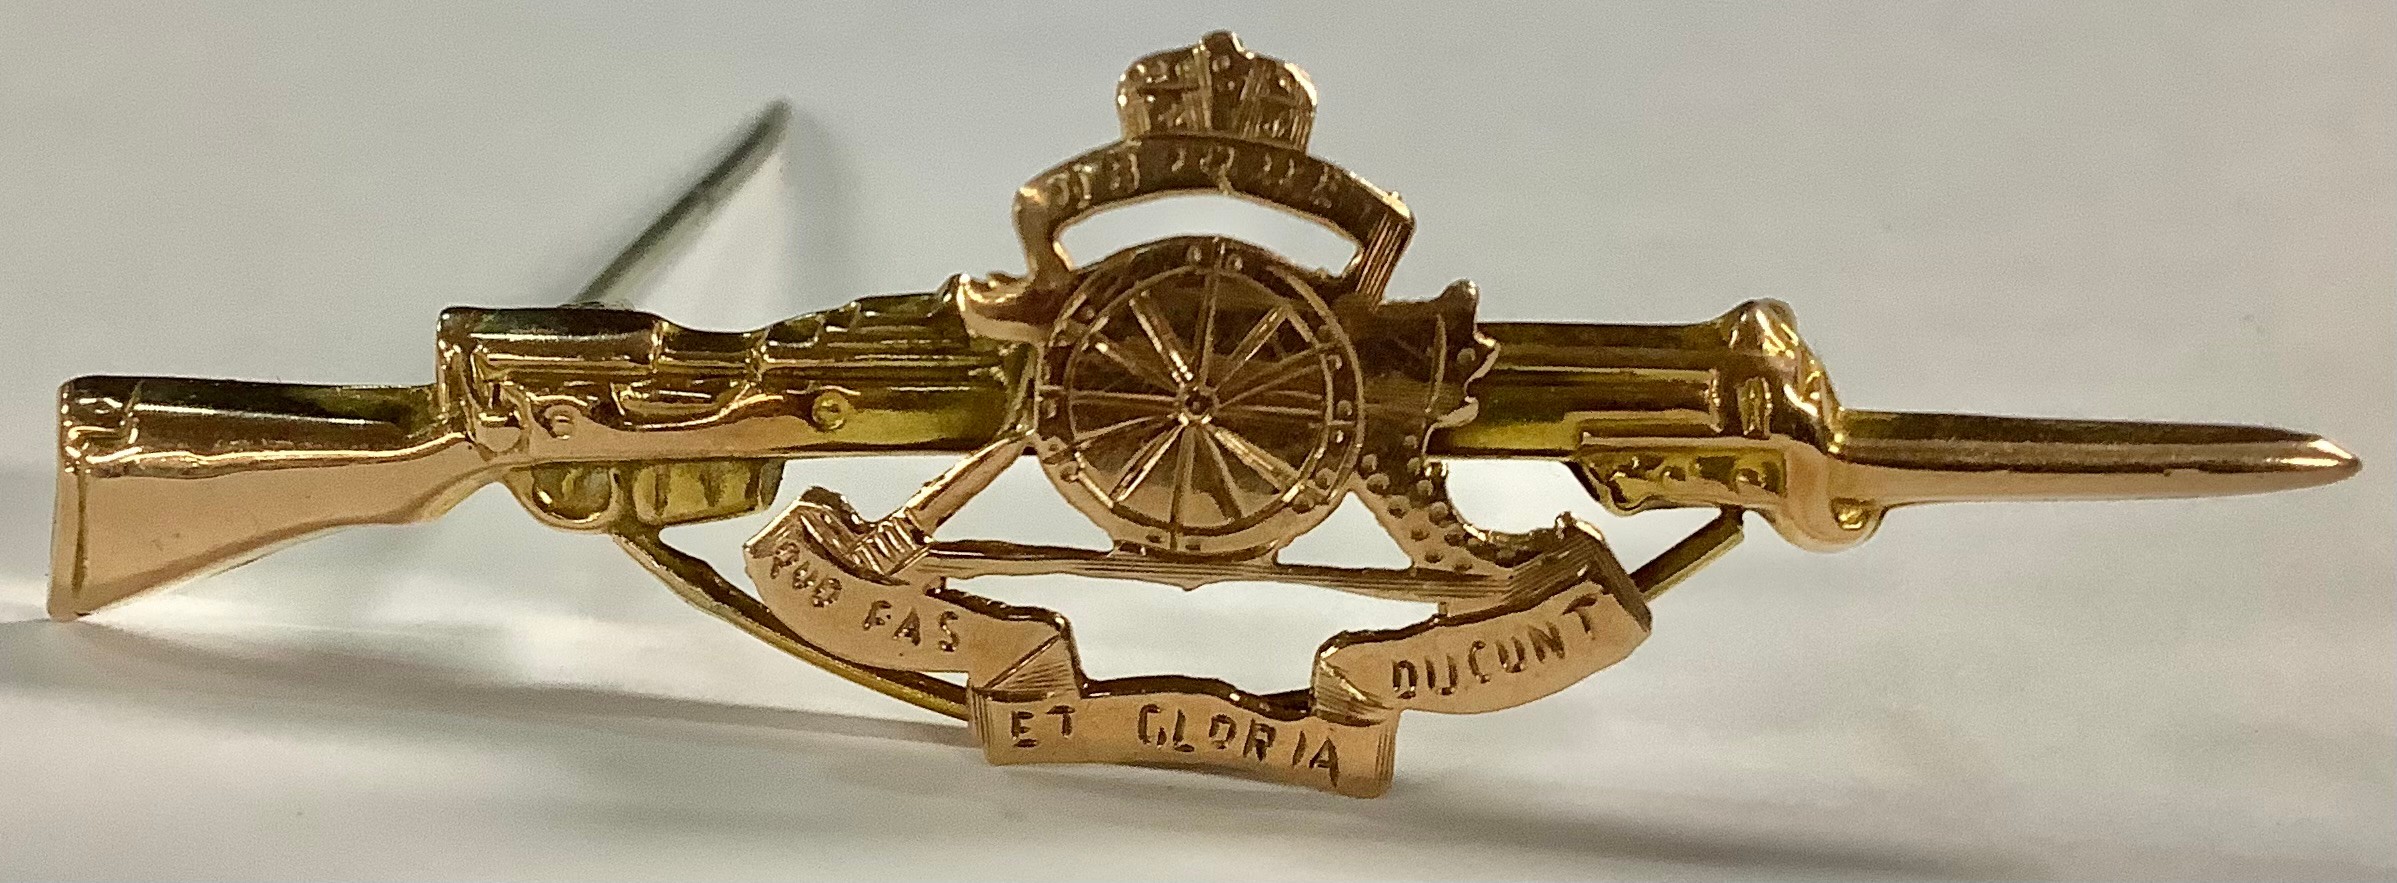 A 9ct gold Royal Artillery rifle and badge brooch